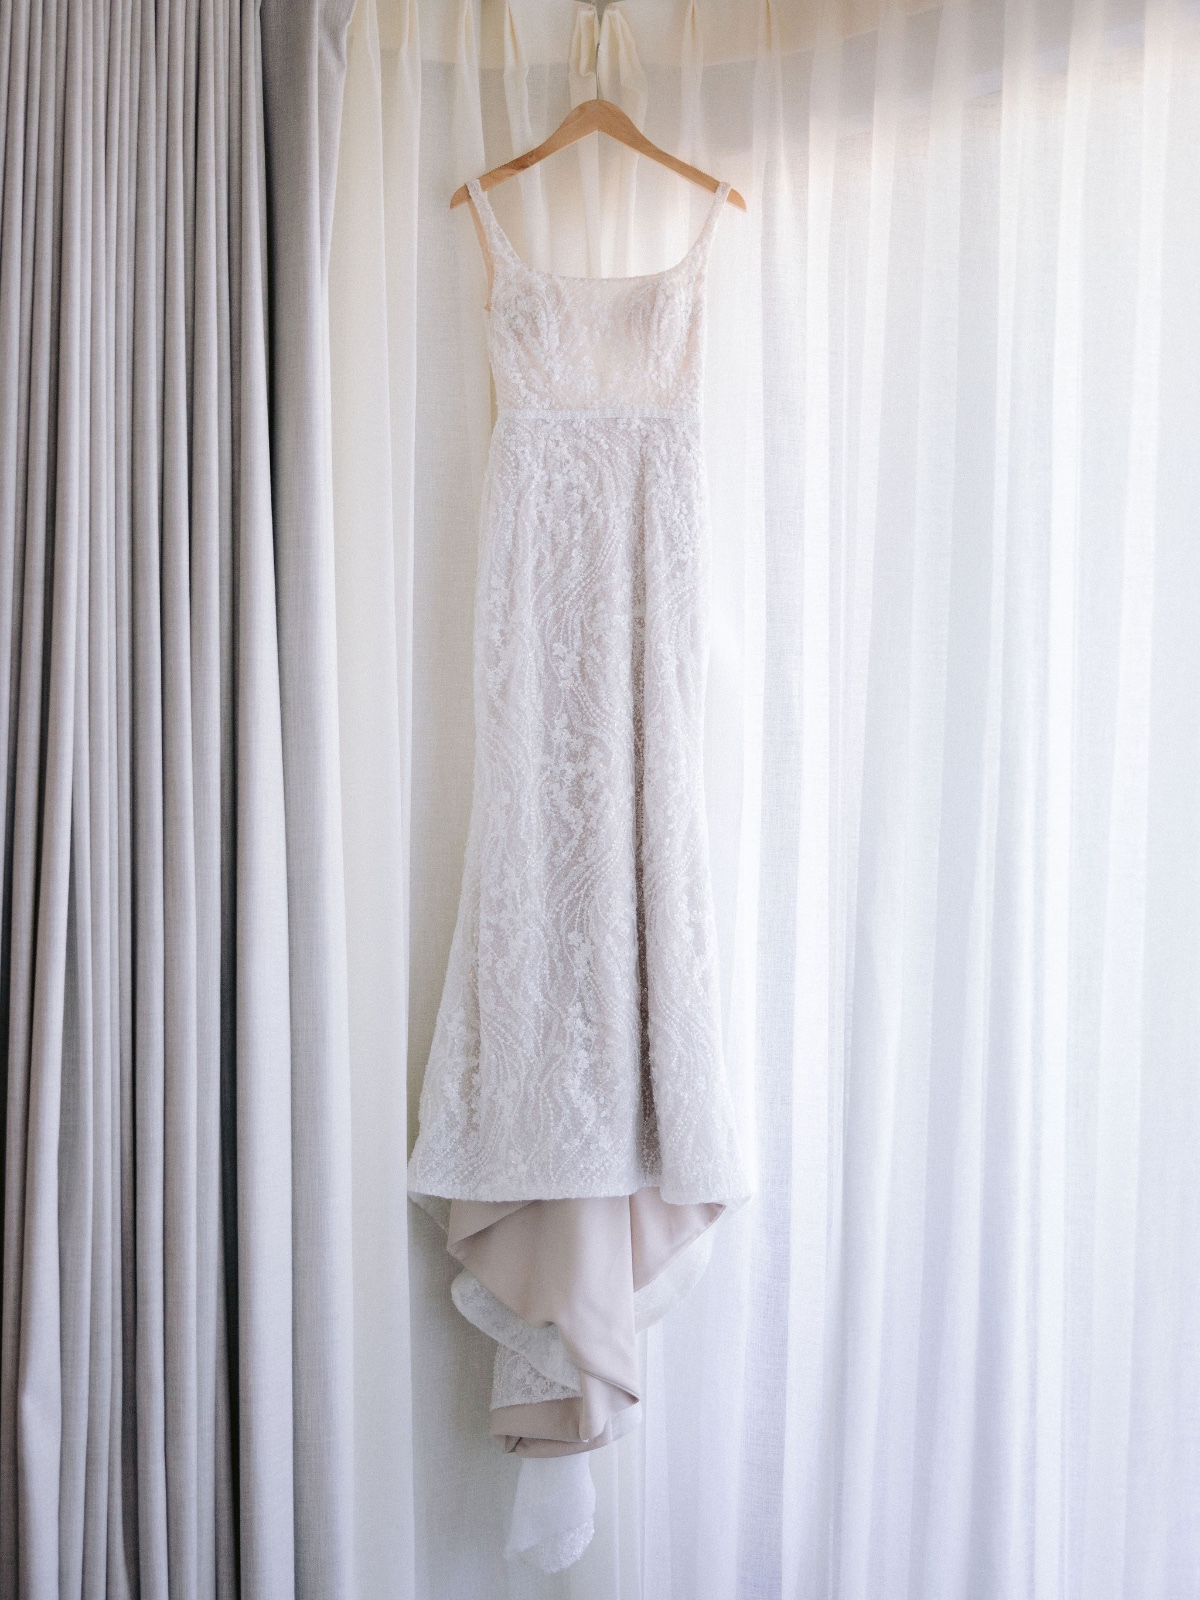 Modern elegant wedding gown